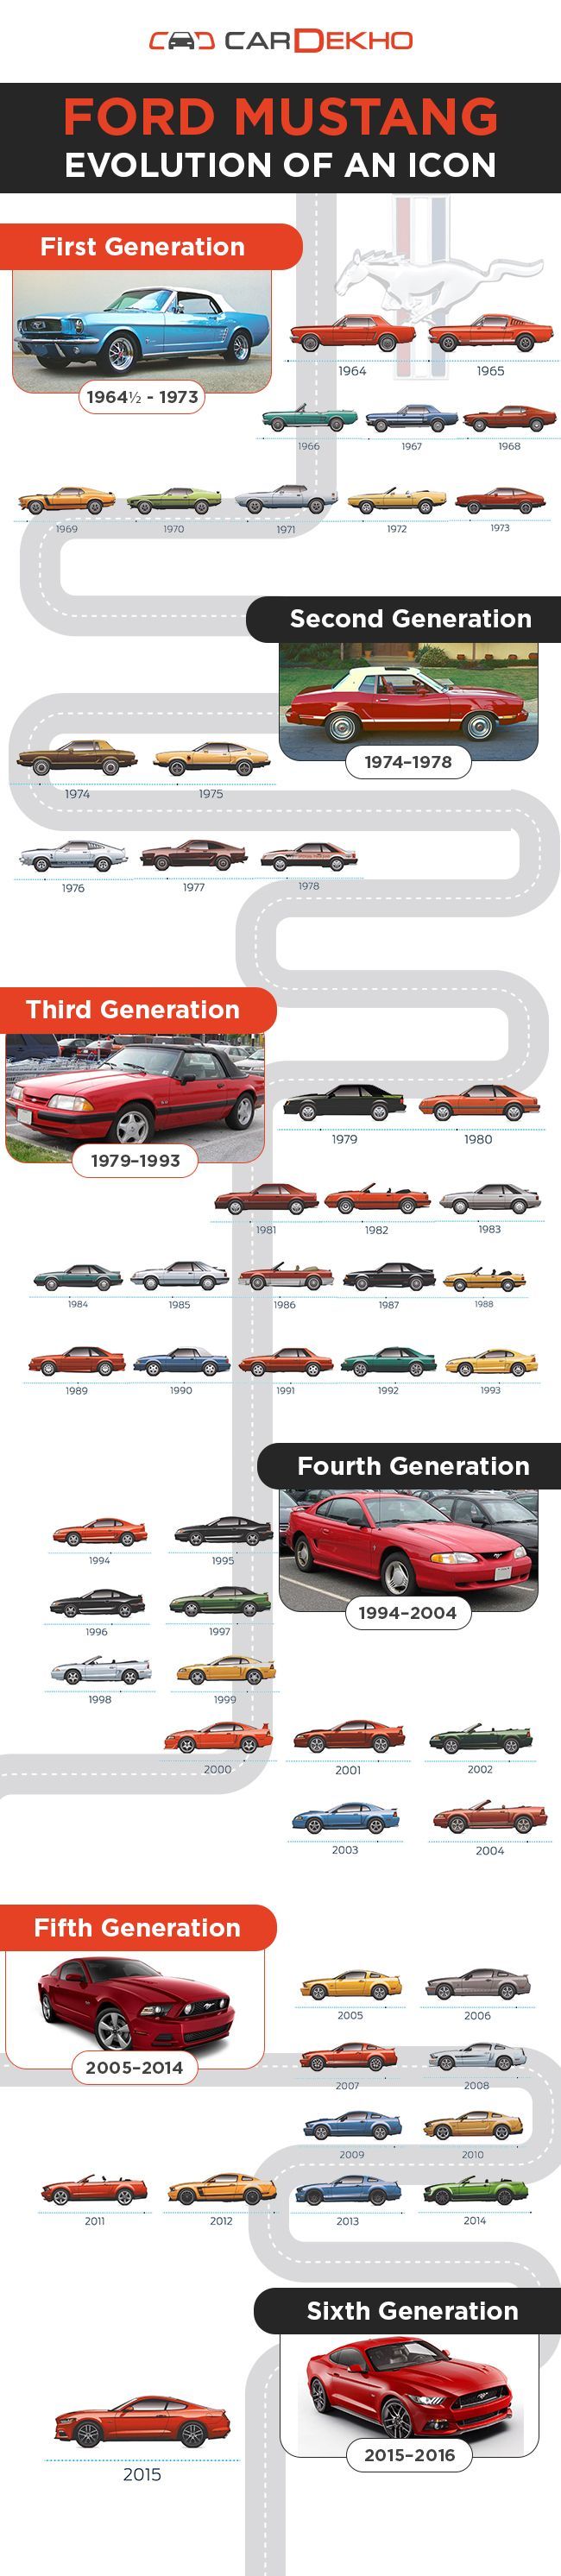 Ford Mustang Evolution - Making People Grin Since 1964 | CarDekho.com